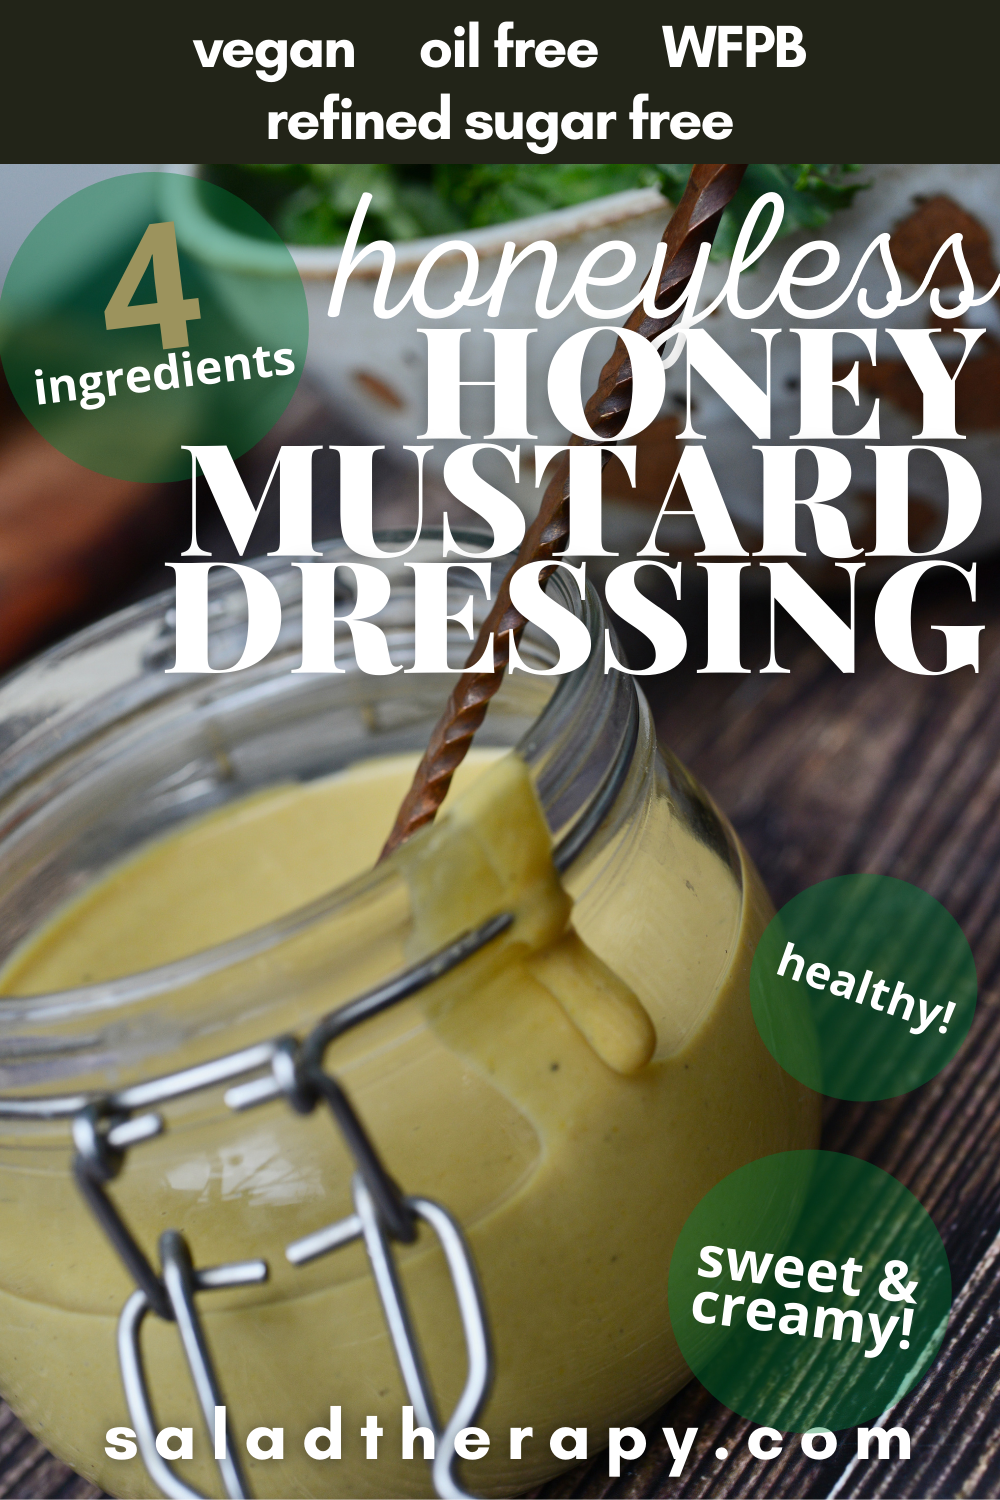 honeyless honey mustard vegan dressing pinterest image with text overlay and mustard dressing in jar next to salad bowl